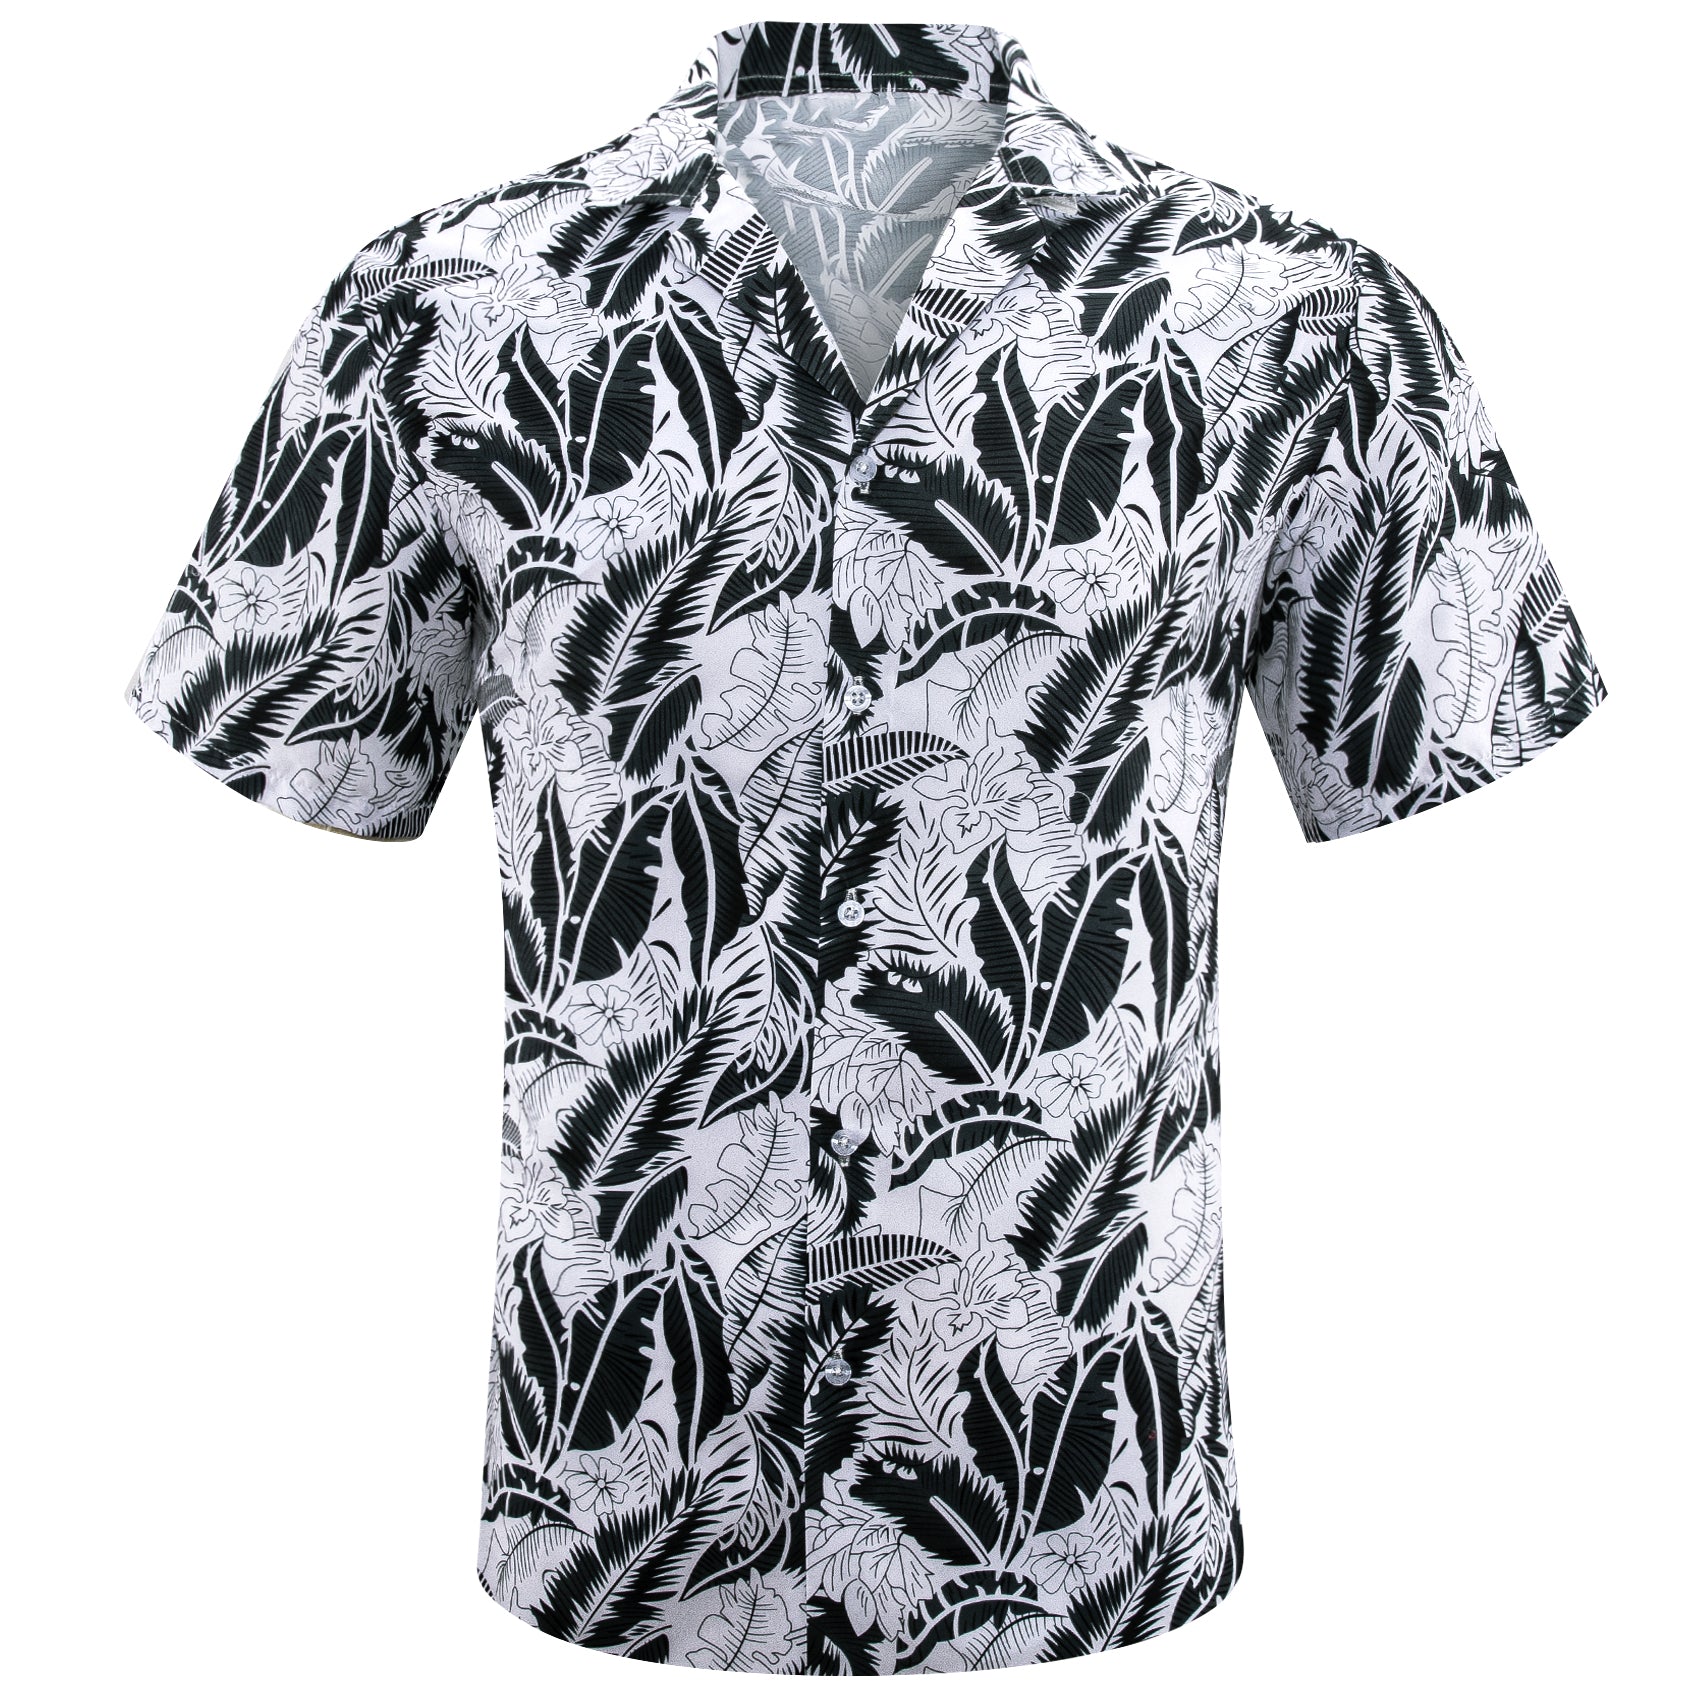 Barry.wang Button Down Shirt Black White Floral Men's Short Sleeves Shirt